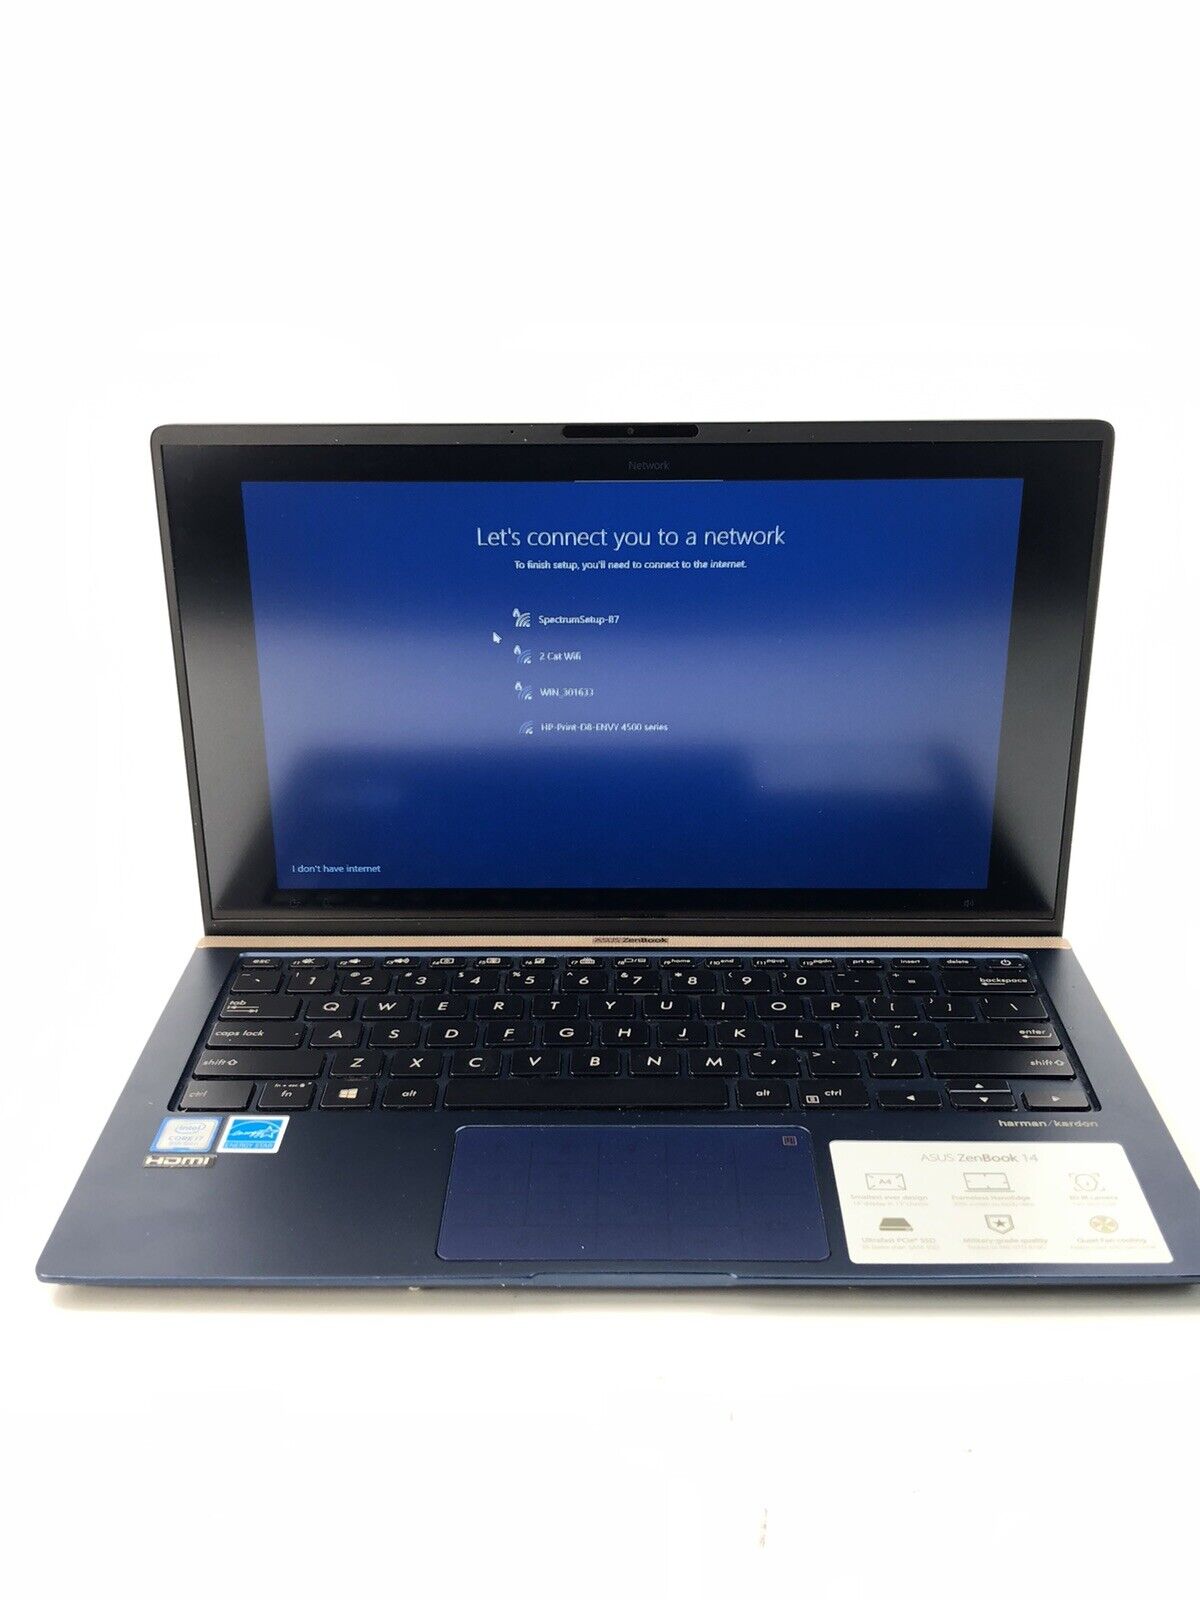 Asus ZenBook UX433F Laptop Intel i7 8th Gen 512GB SSD 8GB RAM - Windows 10 Home